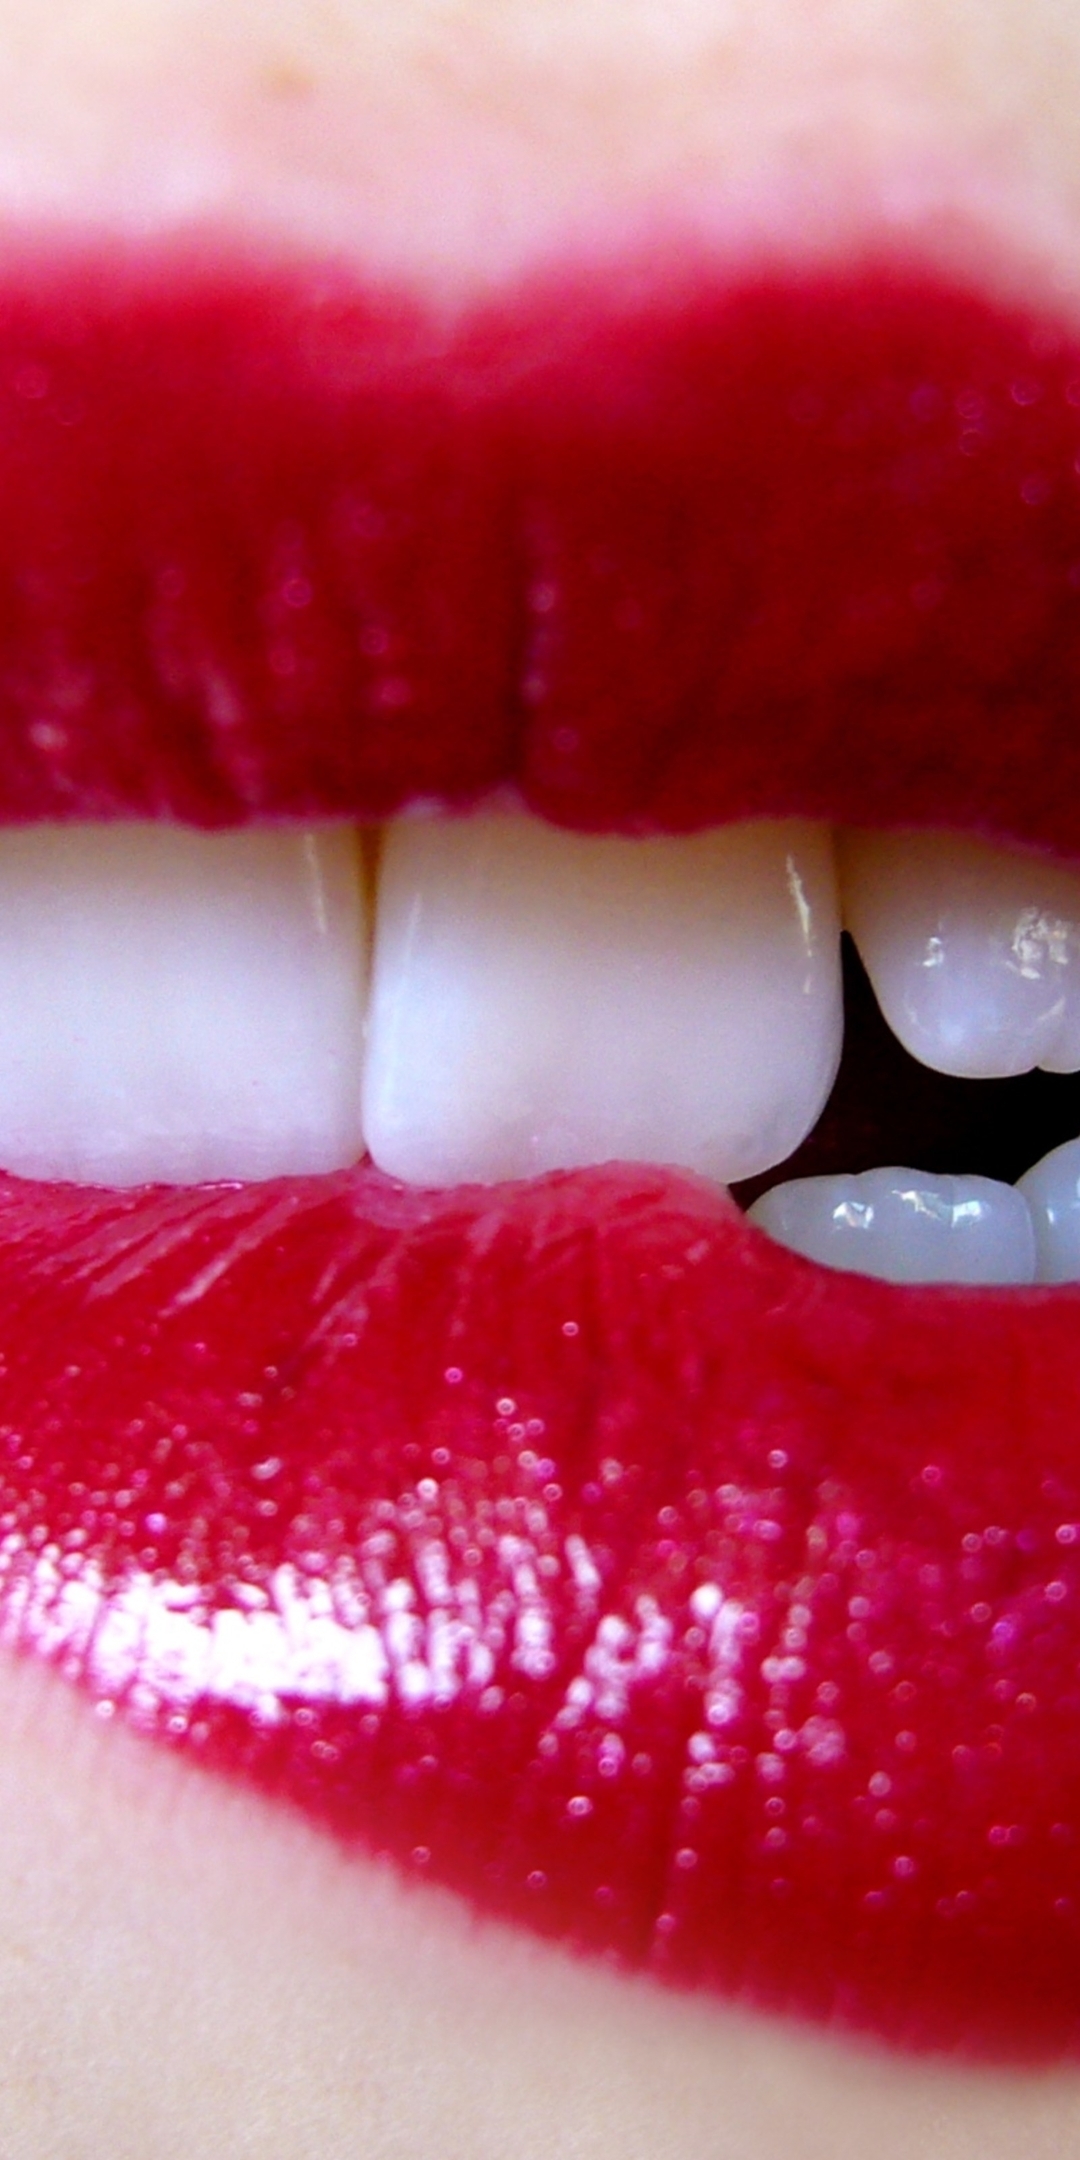 Image: Lips, lipstick, scarlet, color, teeth, bite